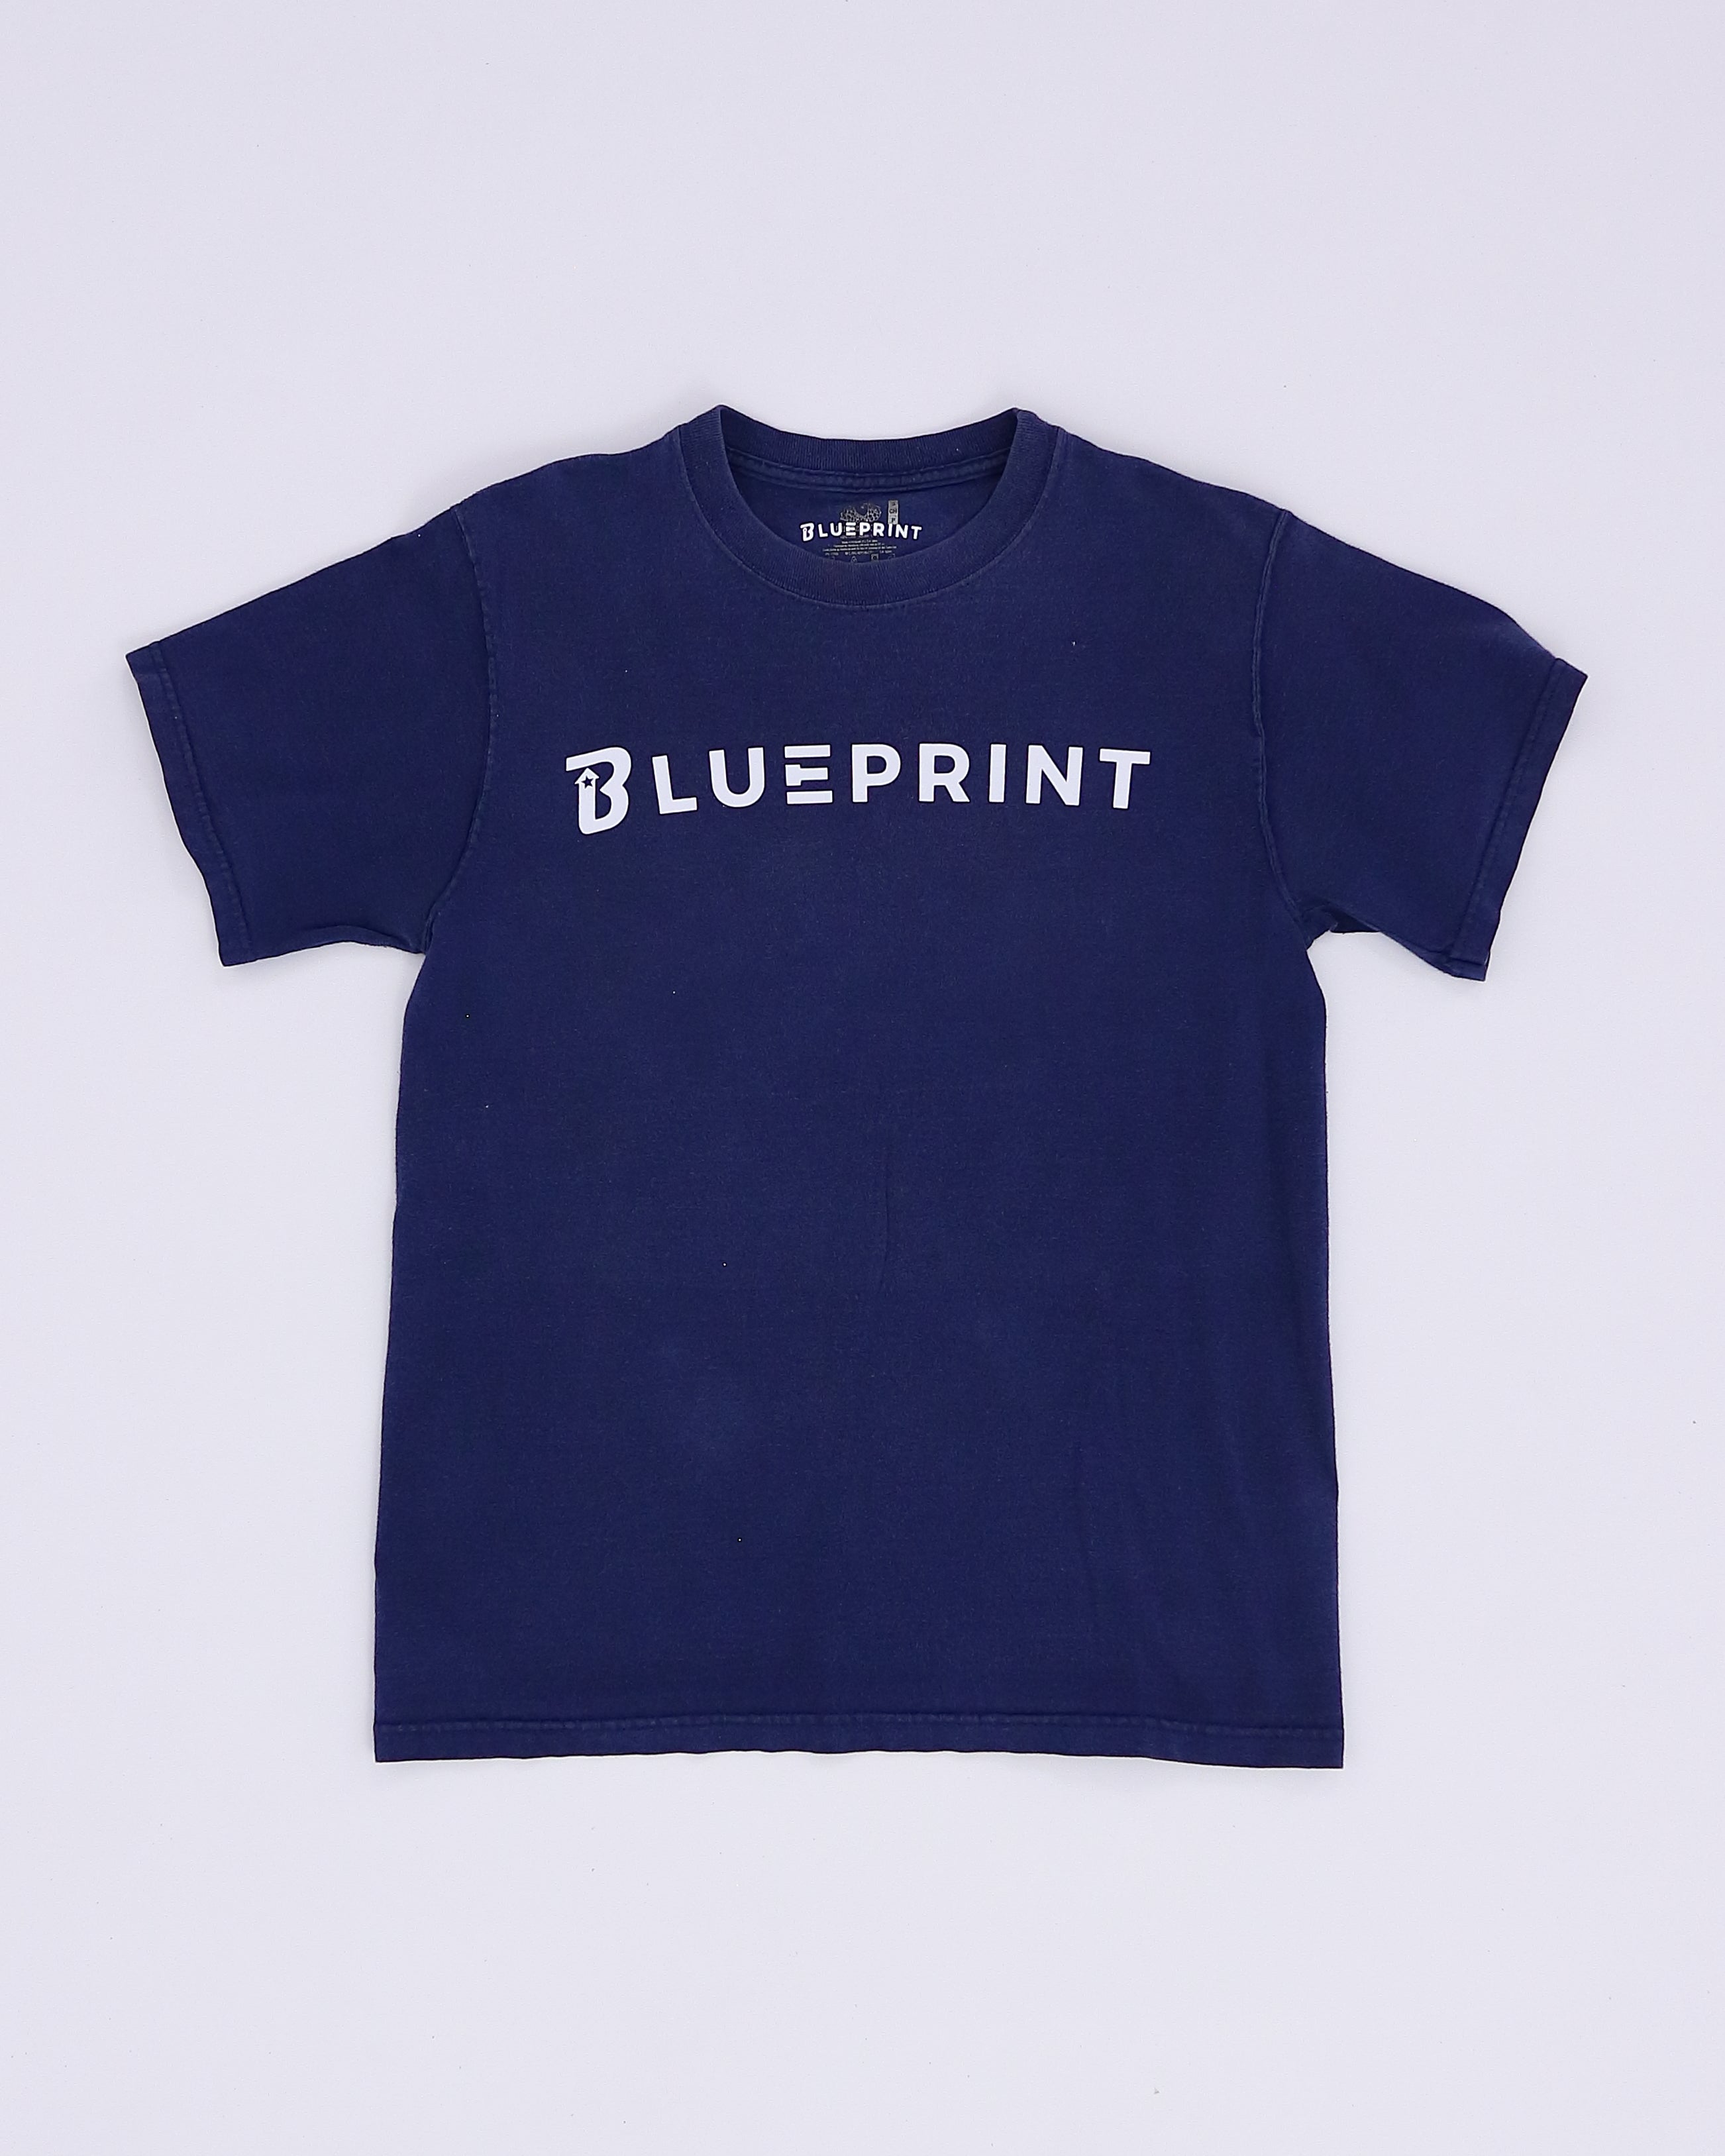 Blueprint Tee - navy (small)